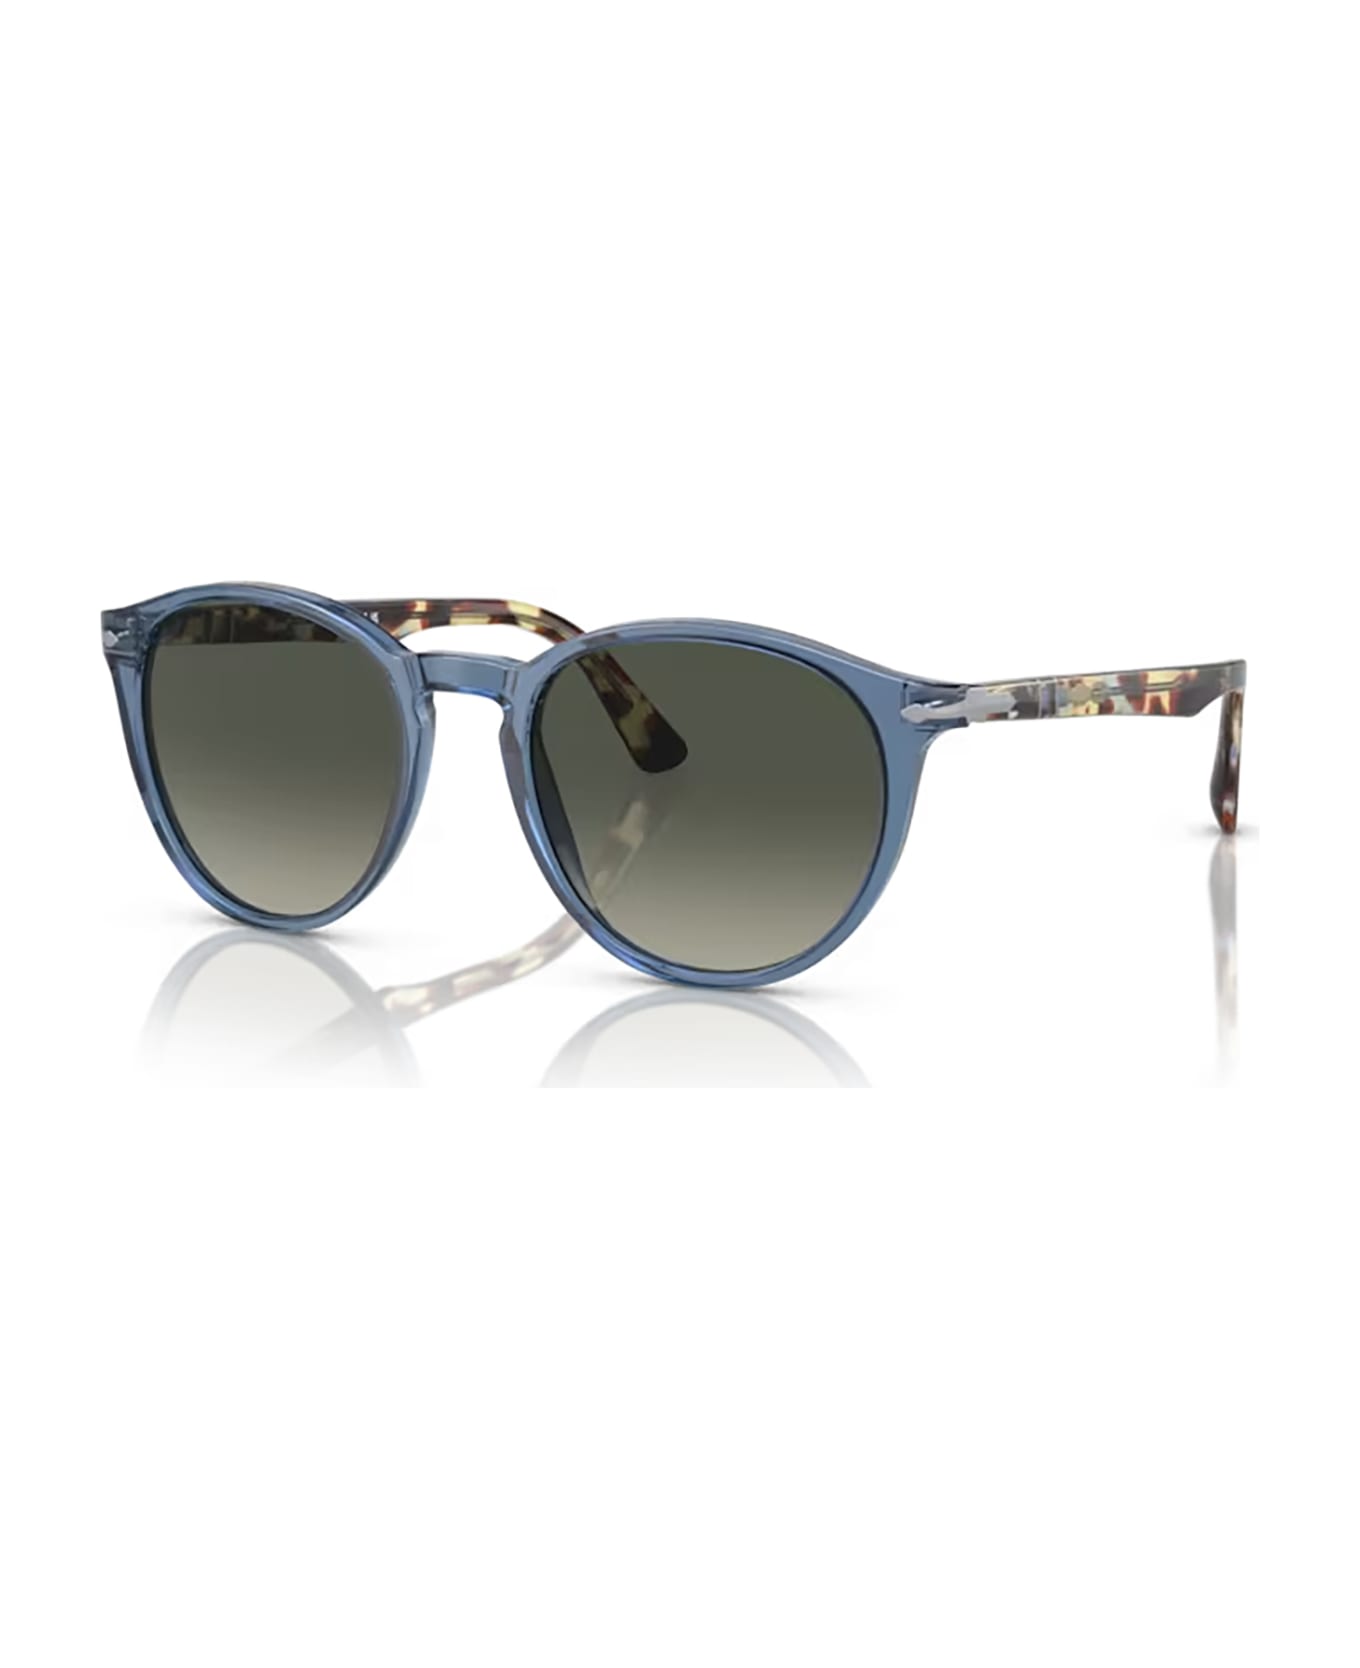 Persol Po3152s Transparent Navy Sunglasses - Transparent Navy サングラス